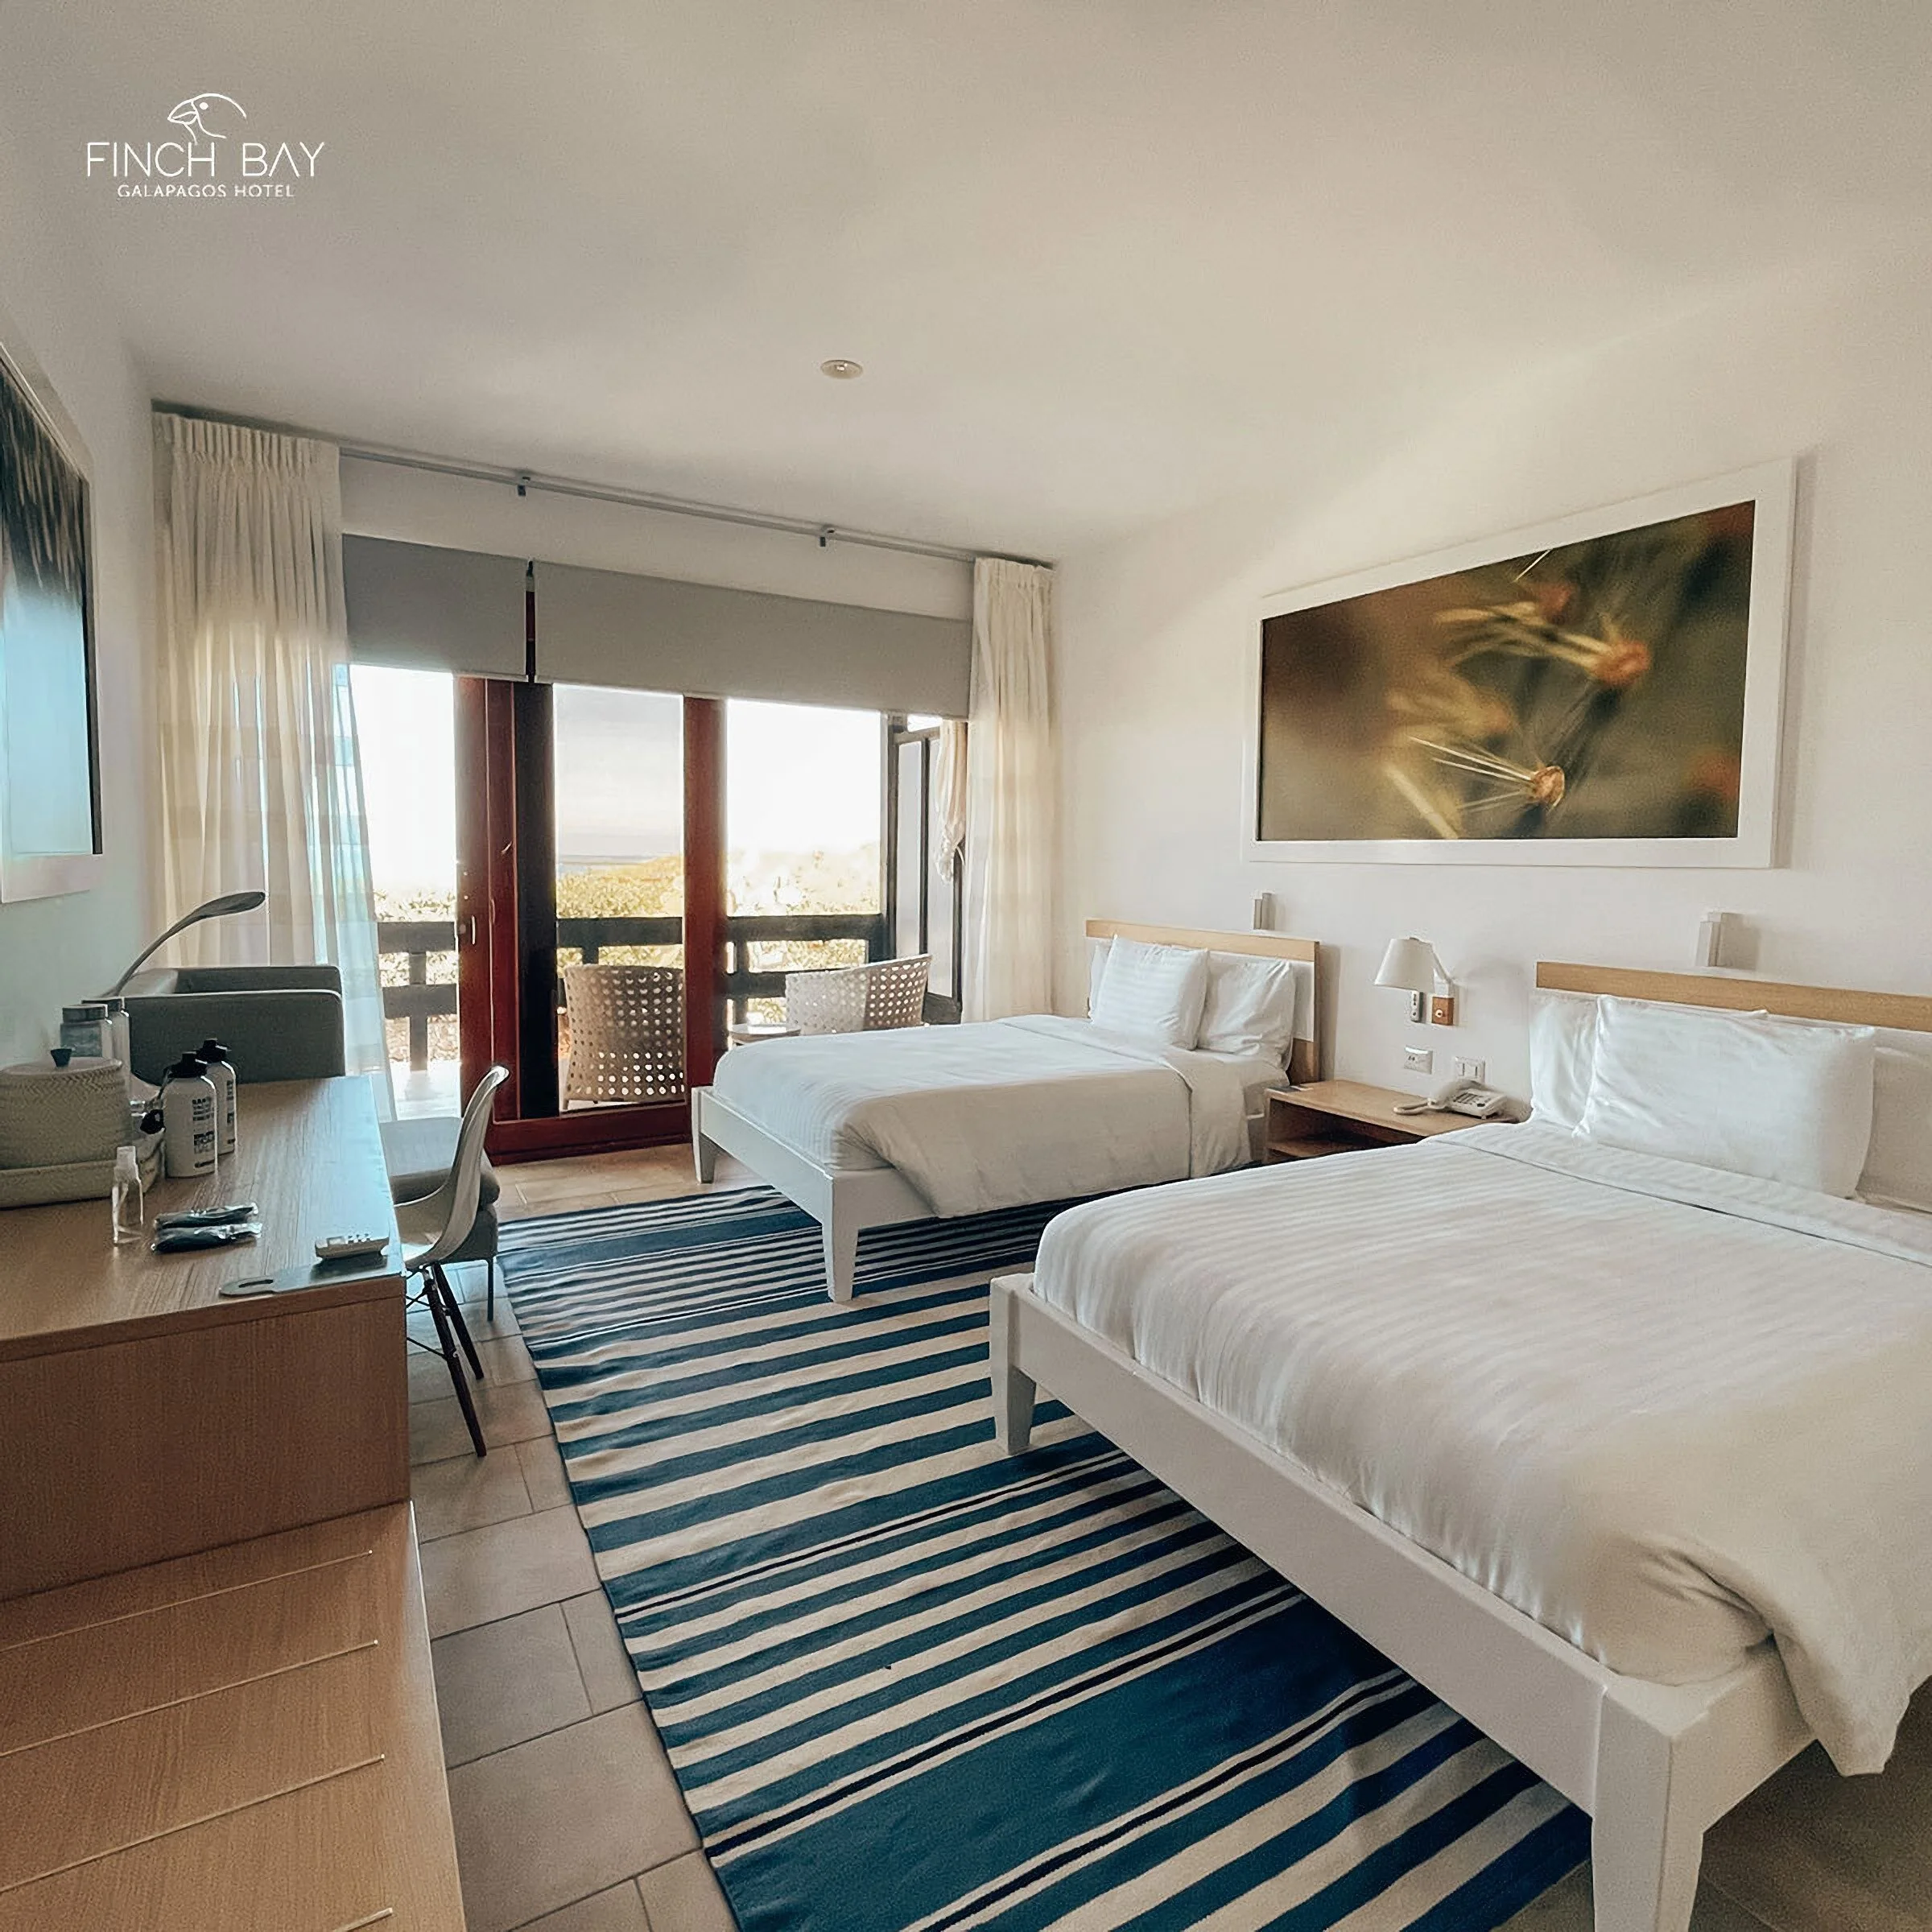 Hoteles-finch-bay-galapagos-hotel-13746